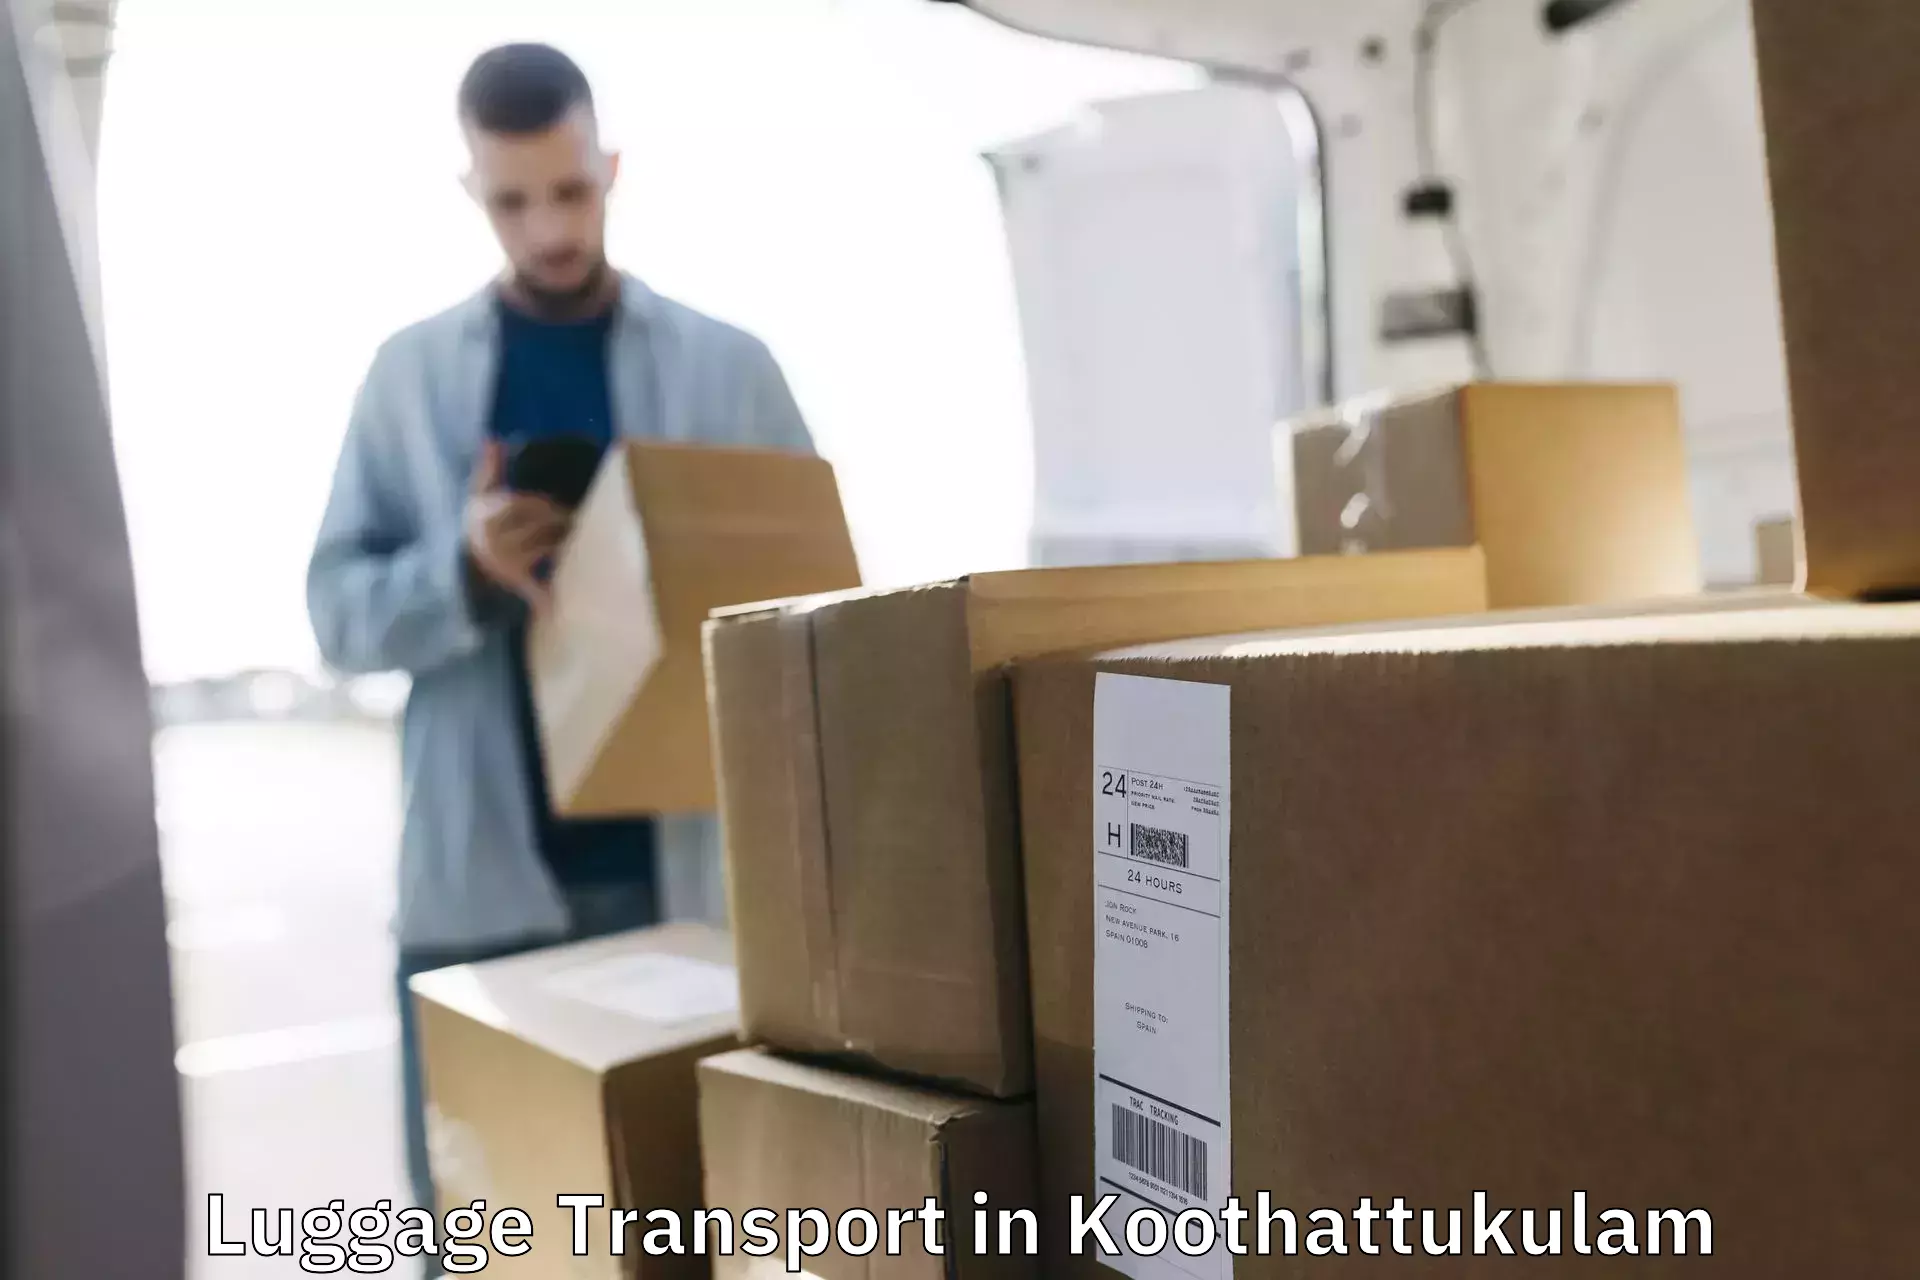 Luggage shipment processing in Koothattukulam